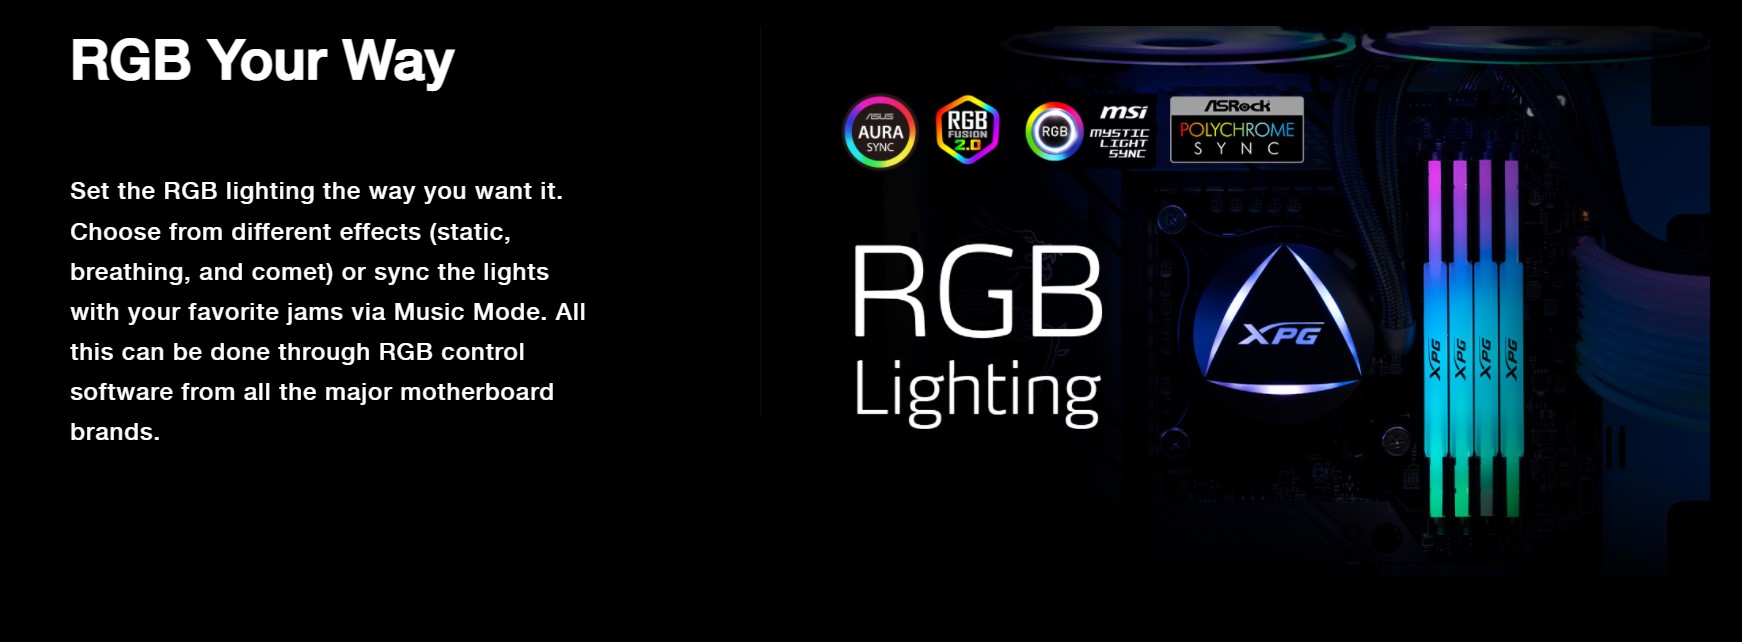 Ram Desktop Adata RGB